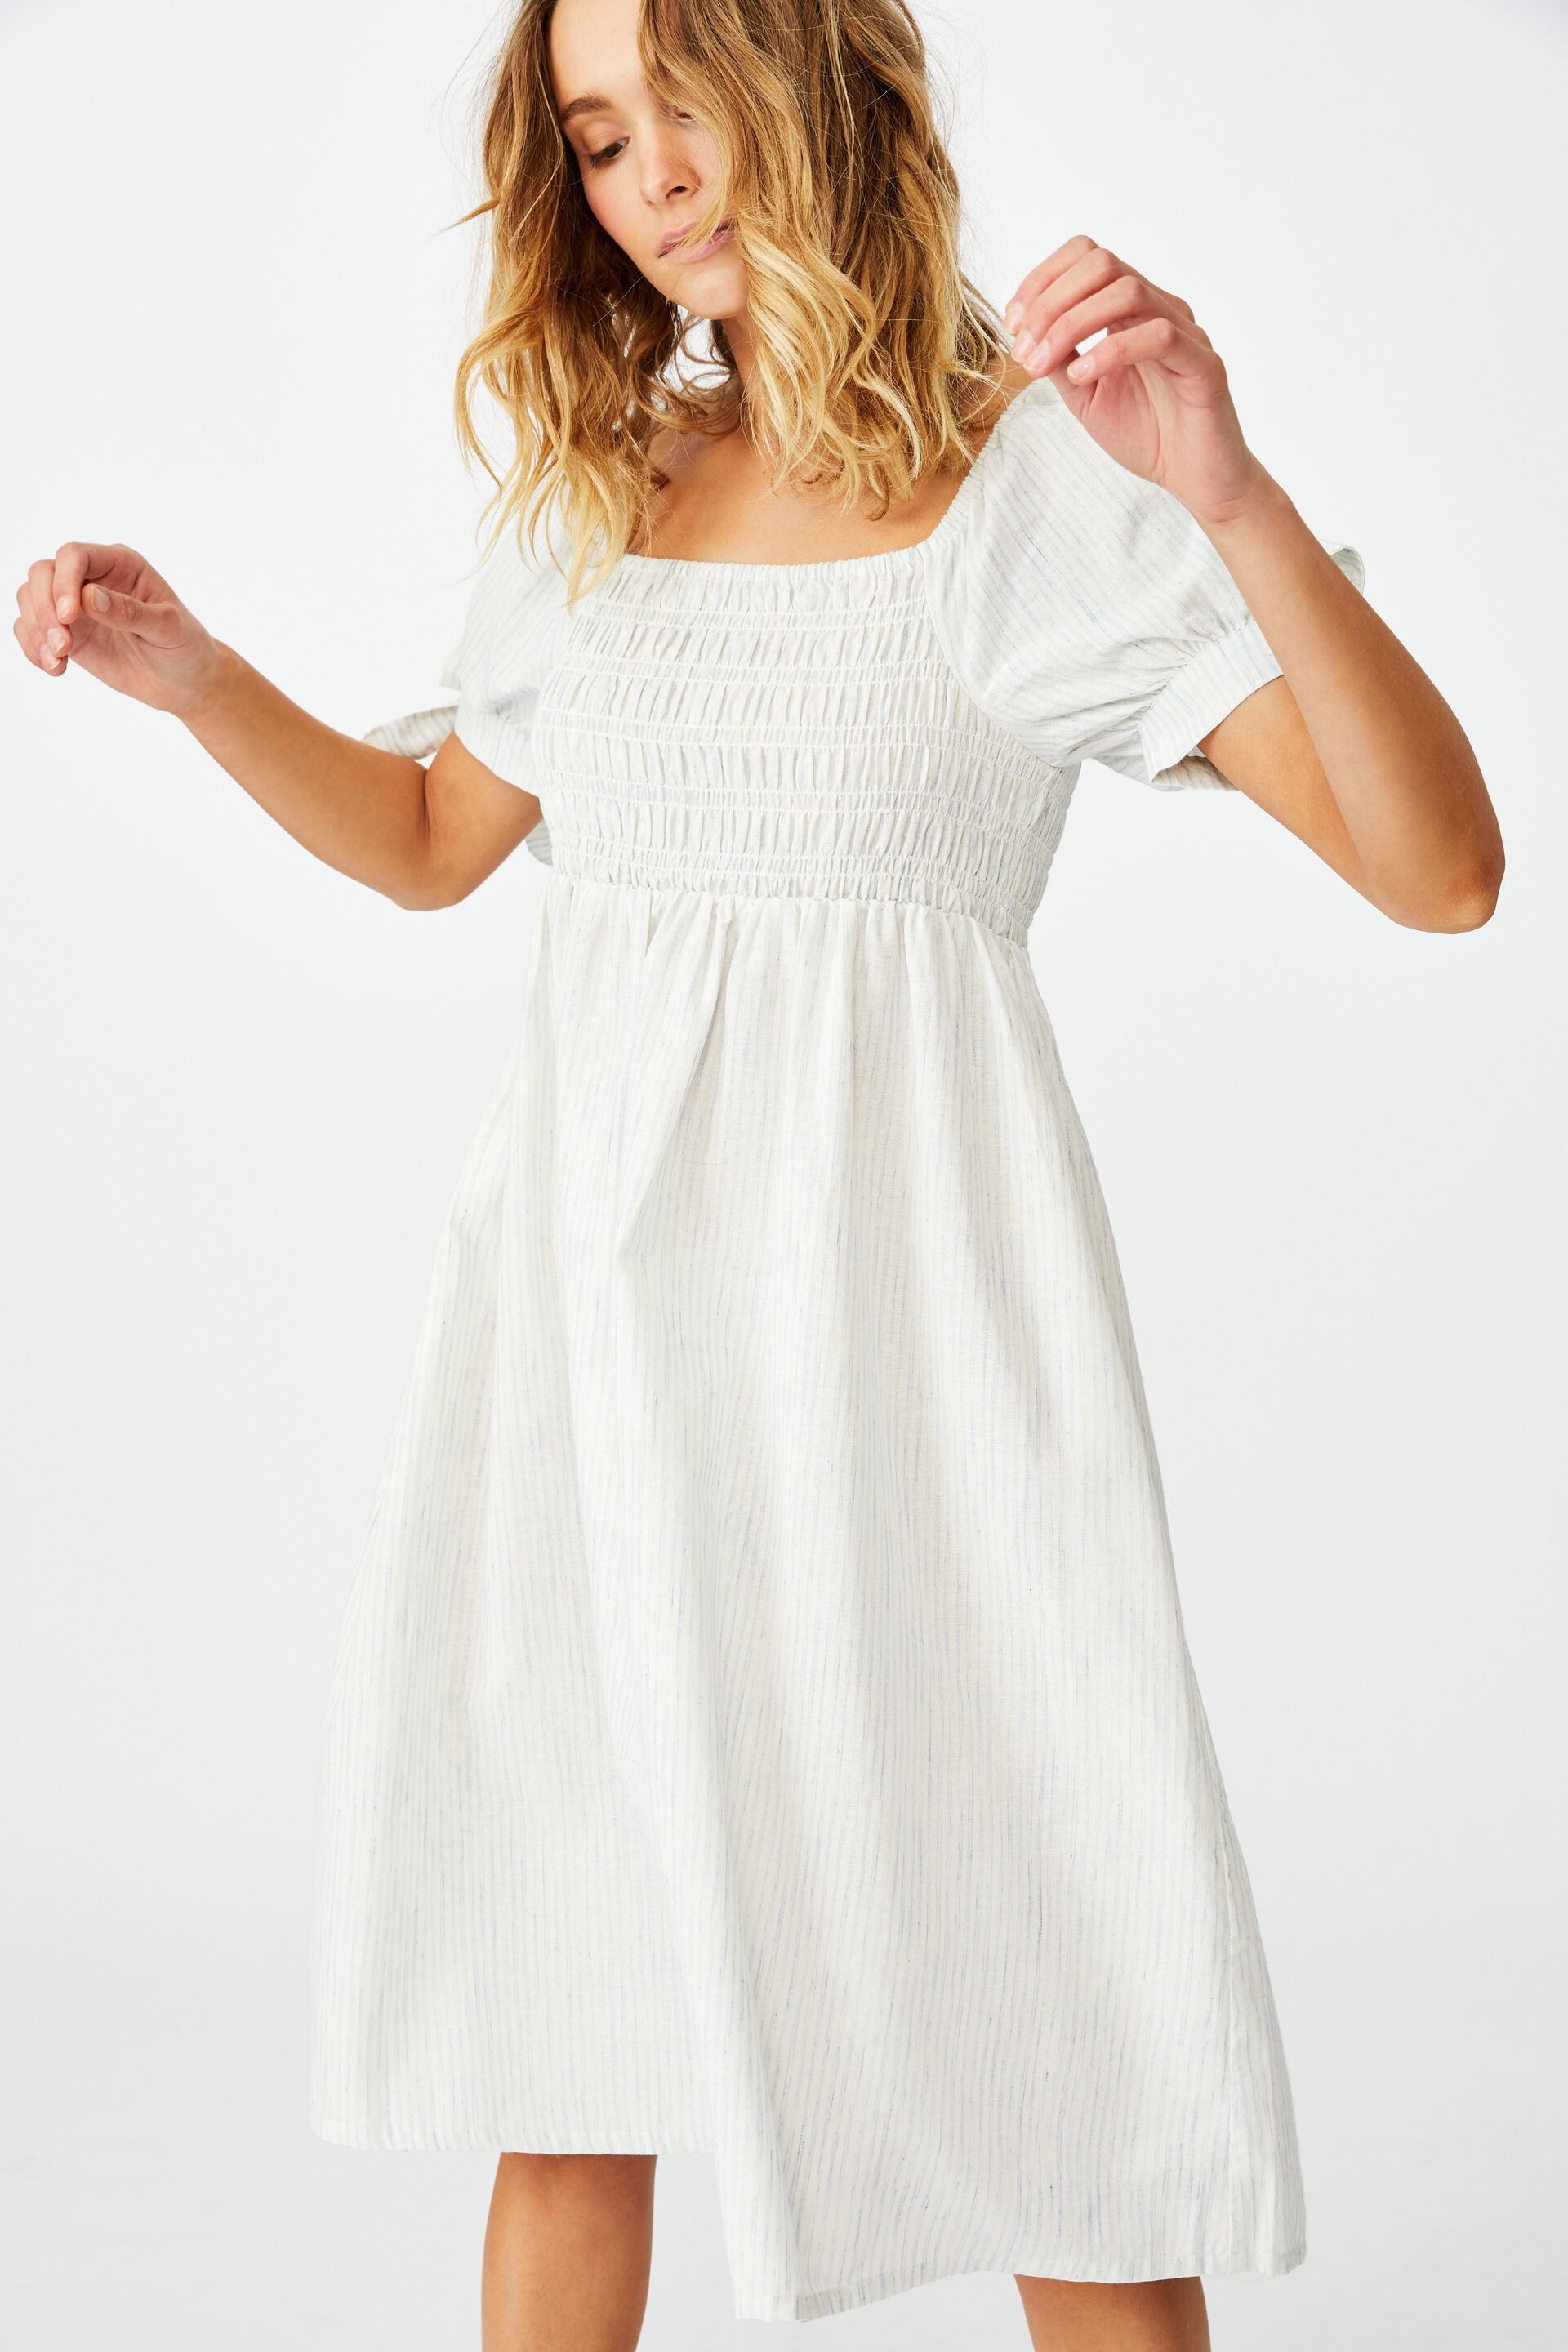 white 1 piece dress